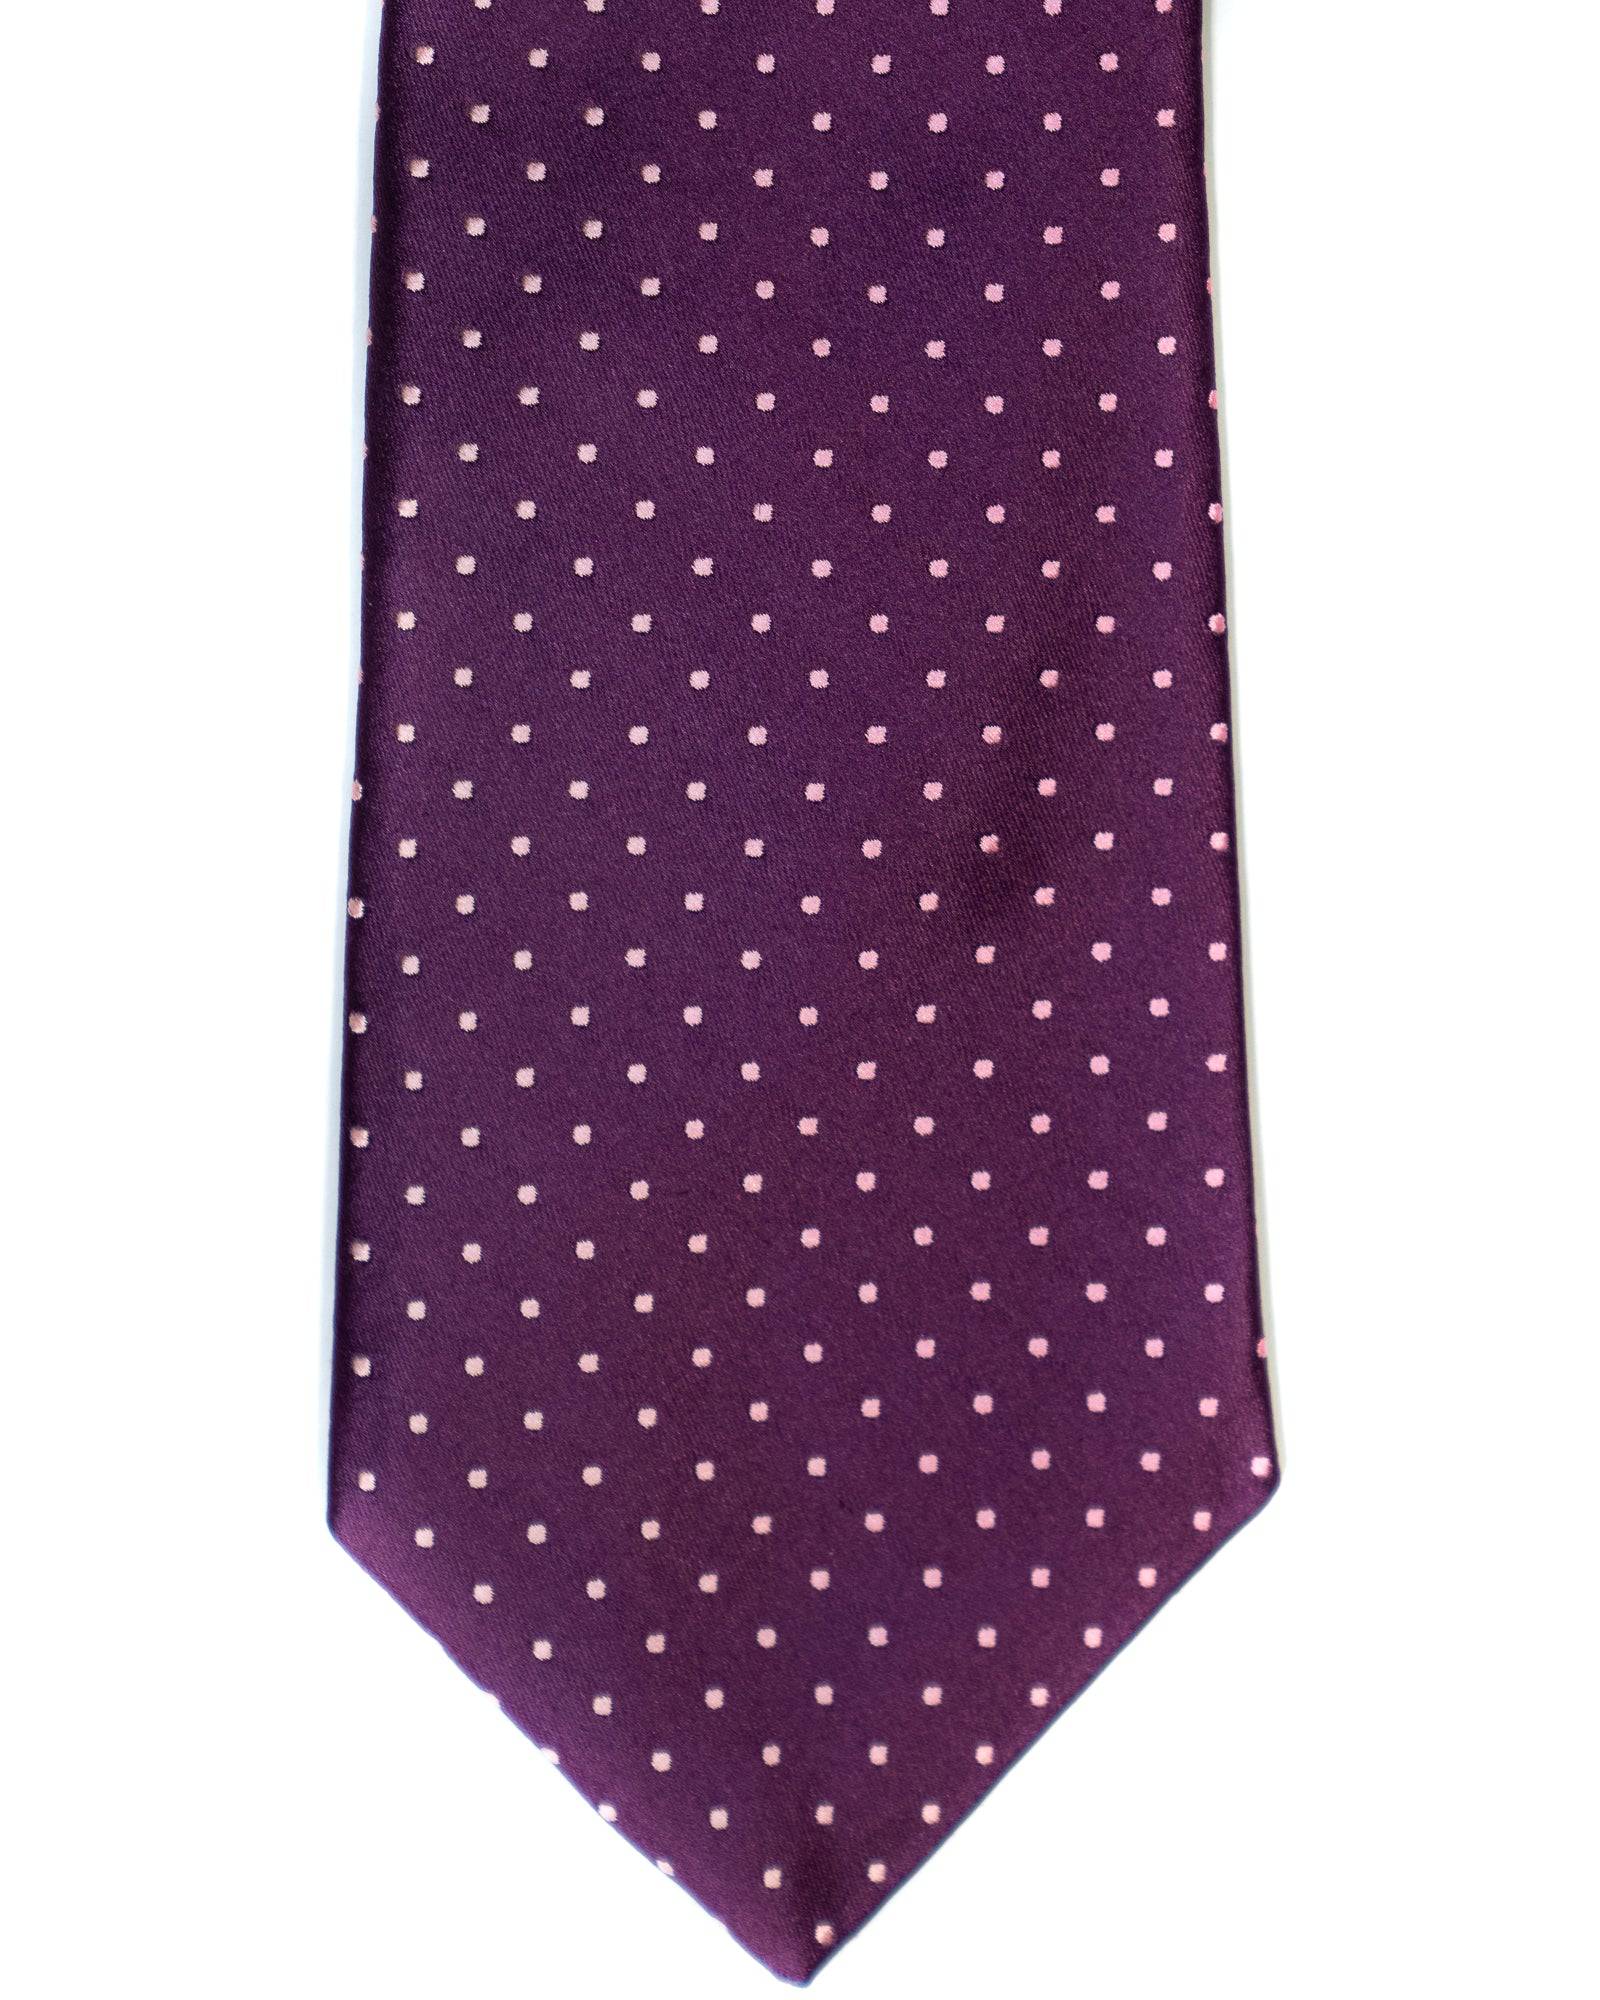 Silk Tie In Plum Dot Print - Rainwater's Men's Clothing and Tuxedo Rental